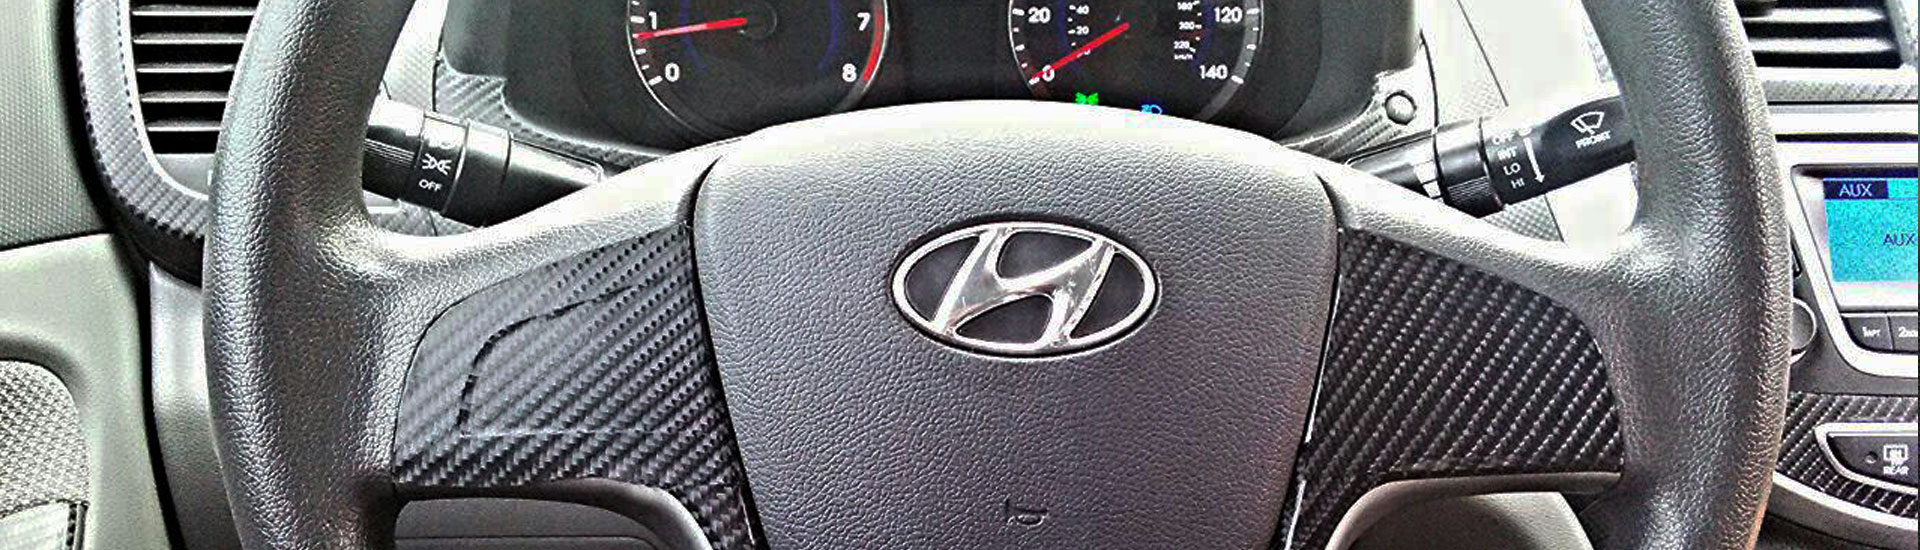 Hyundai Accent Dash Kits